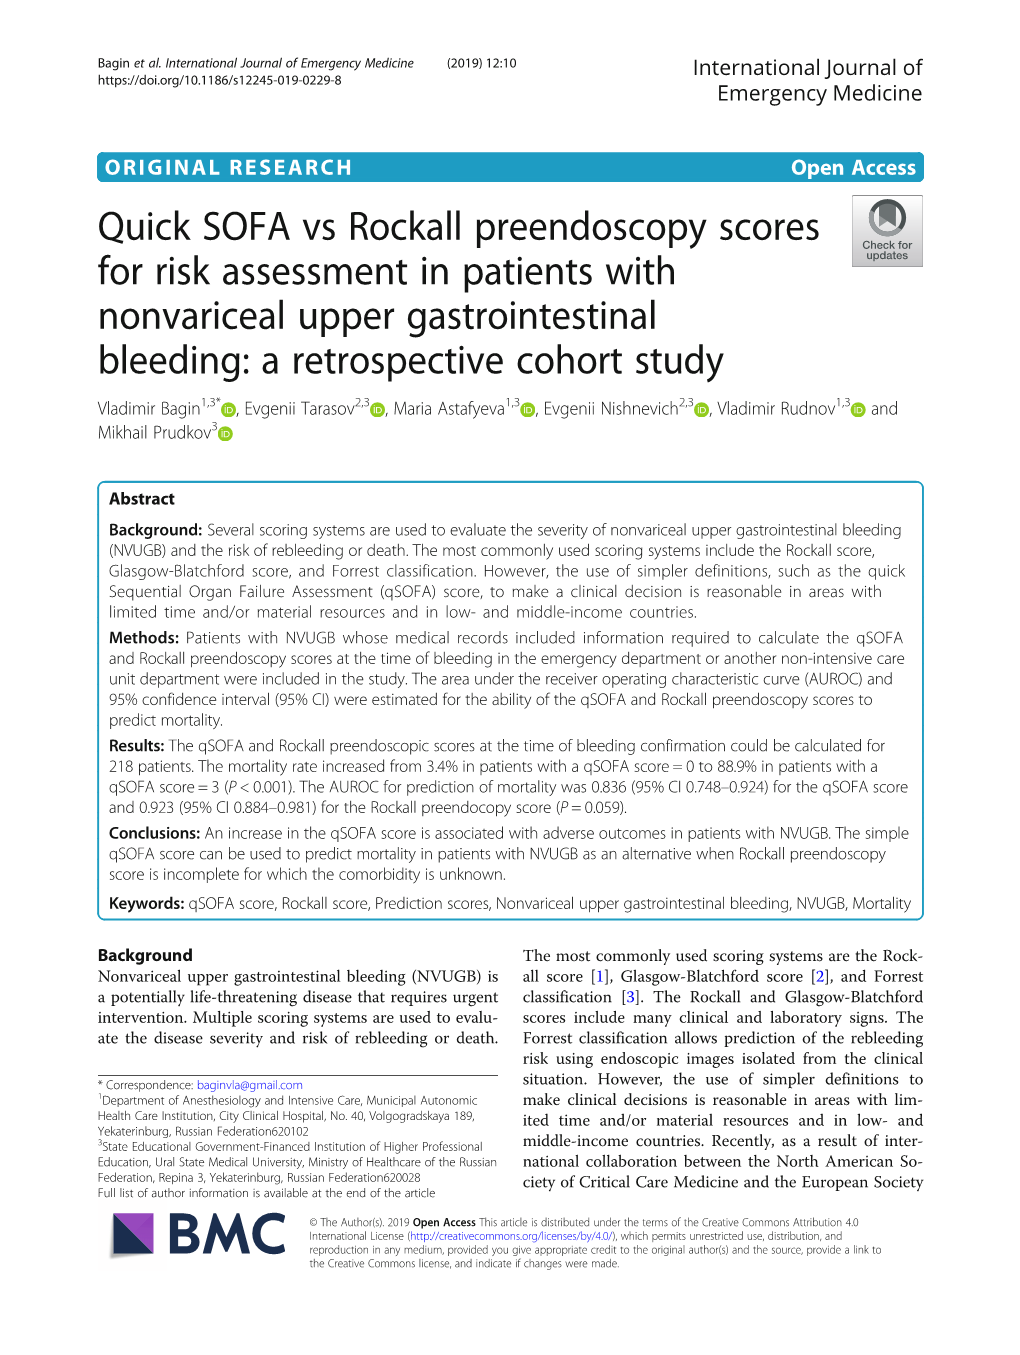 Quick SOFA Vs Rockall Preendoscopy Scores for Risk Assessment in Patients with Nonvariceal Upper Gastrointestinal Bleeding